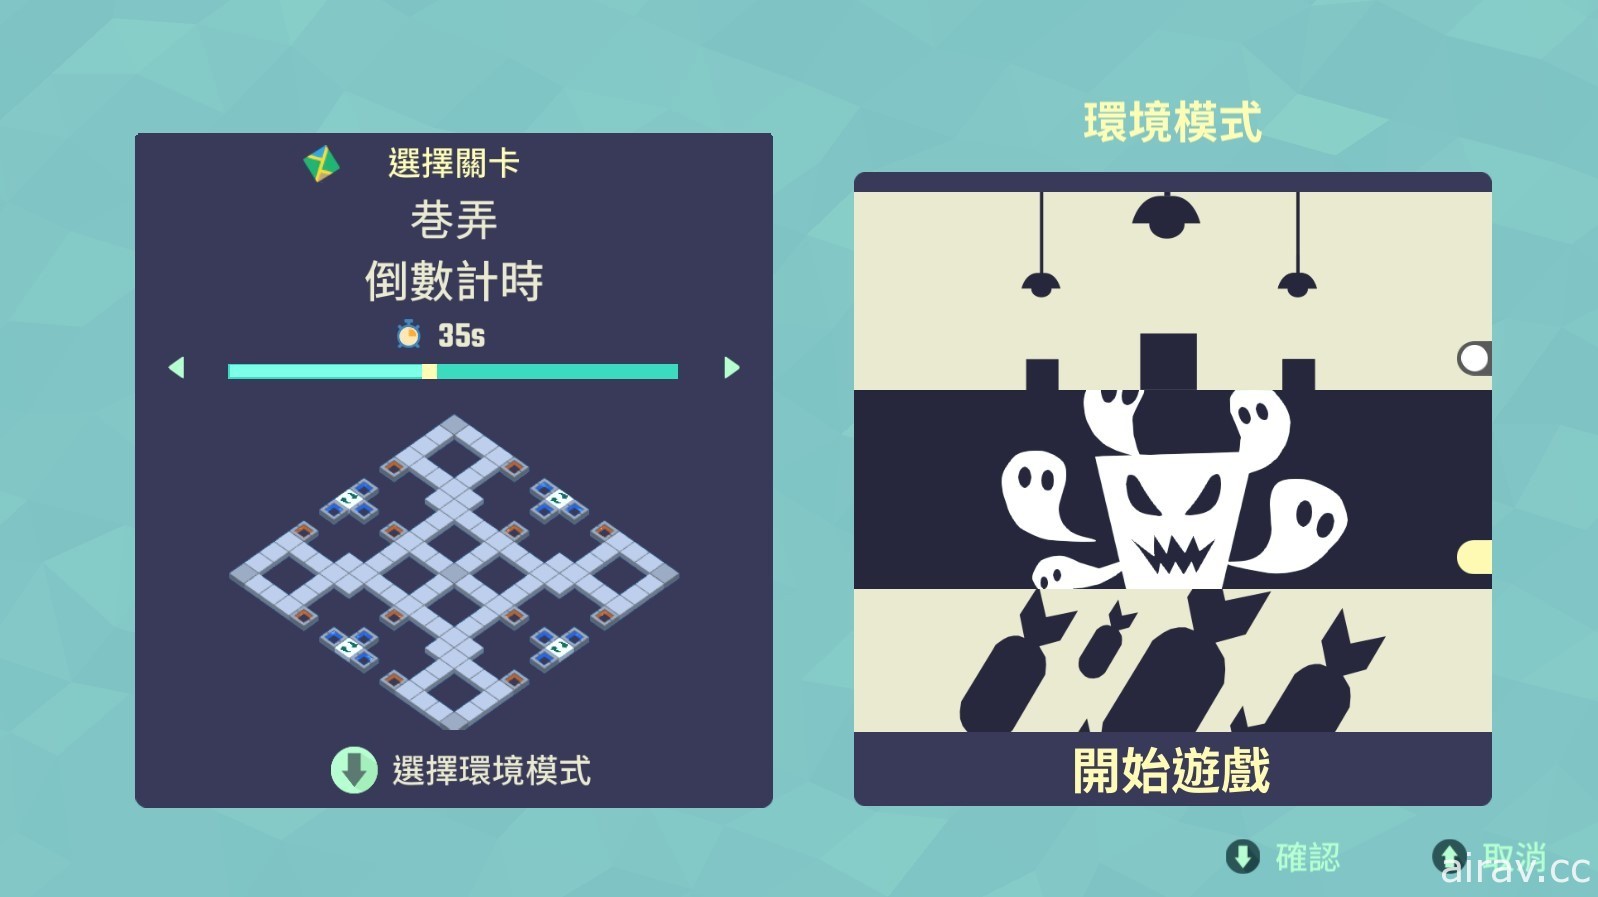 IGA 最佳游戏设计、台湾团队开发动作派对游戏《给地偷地 Gerritory》登陆 Steam